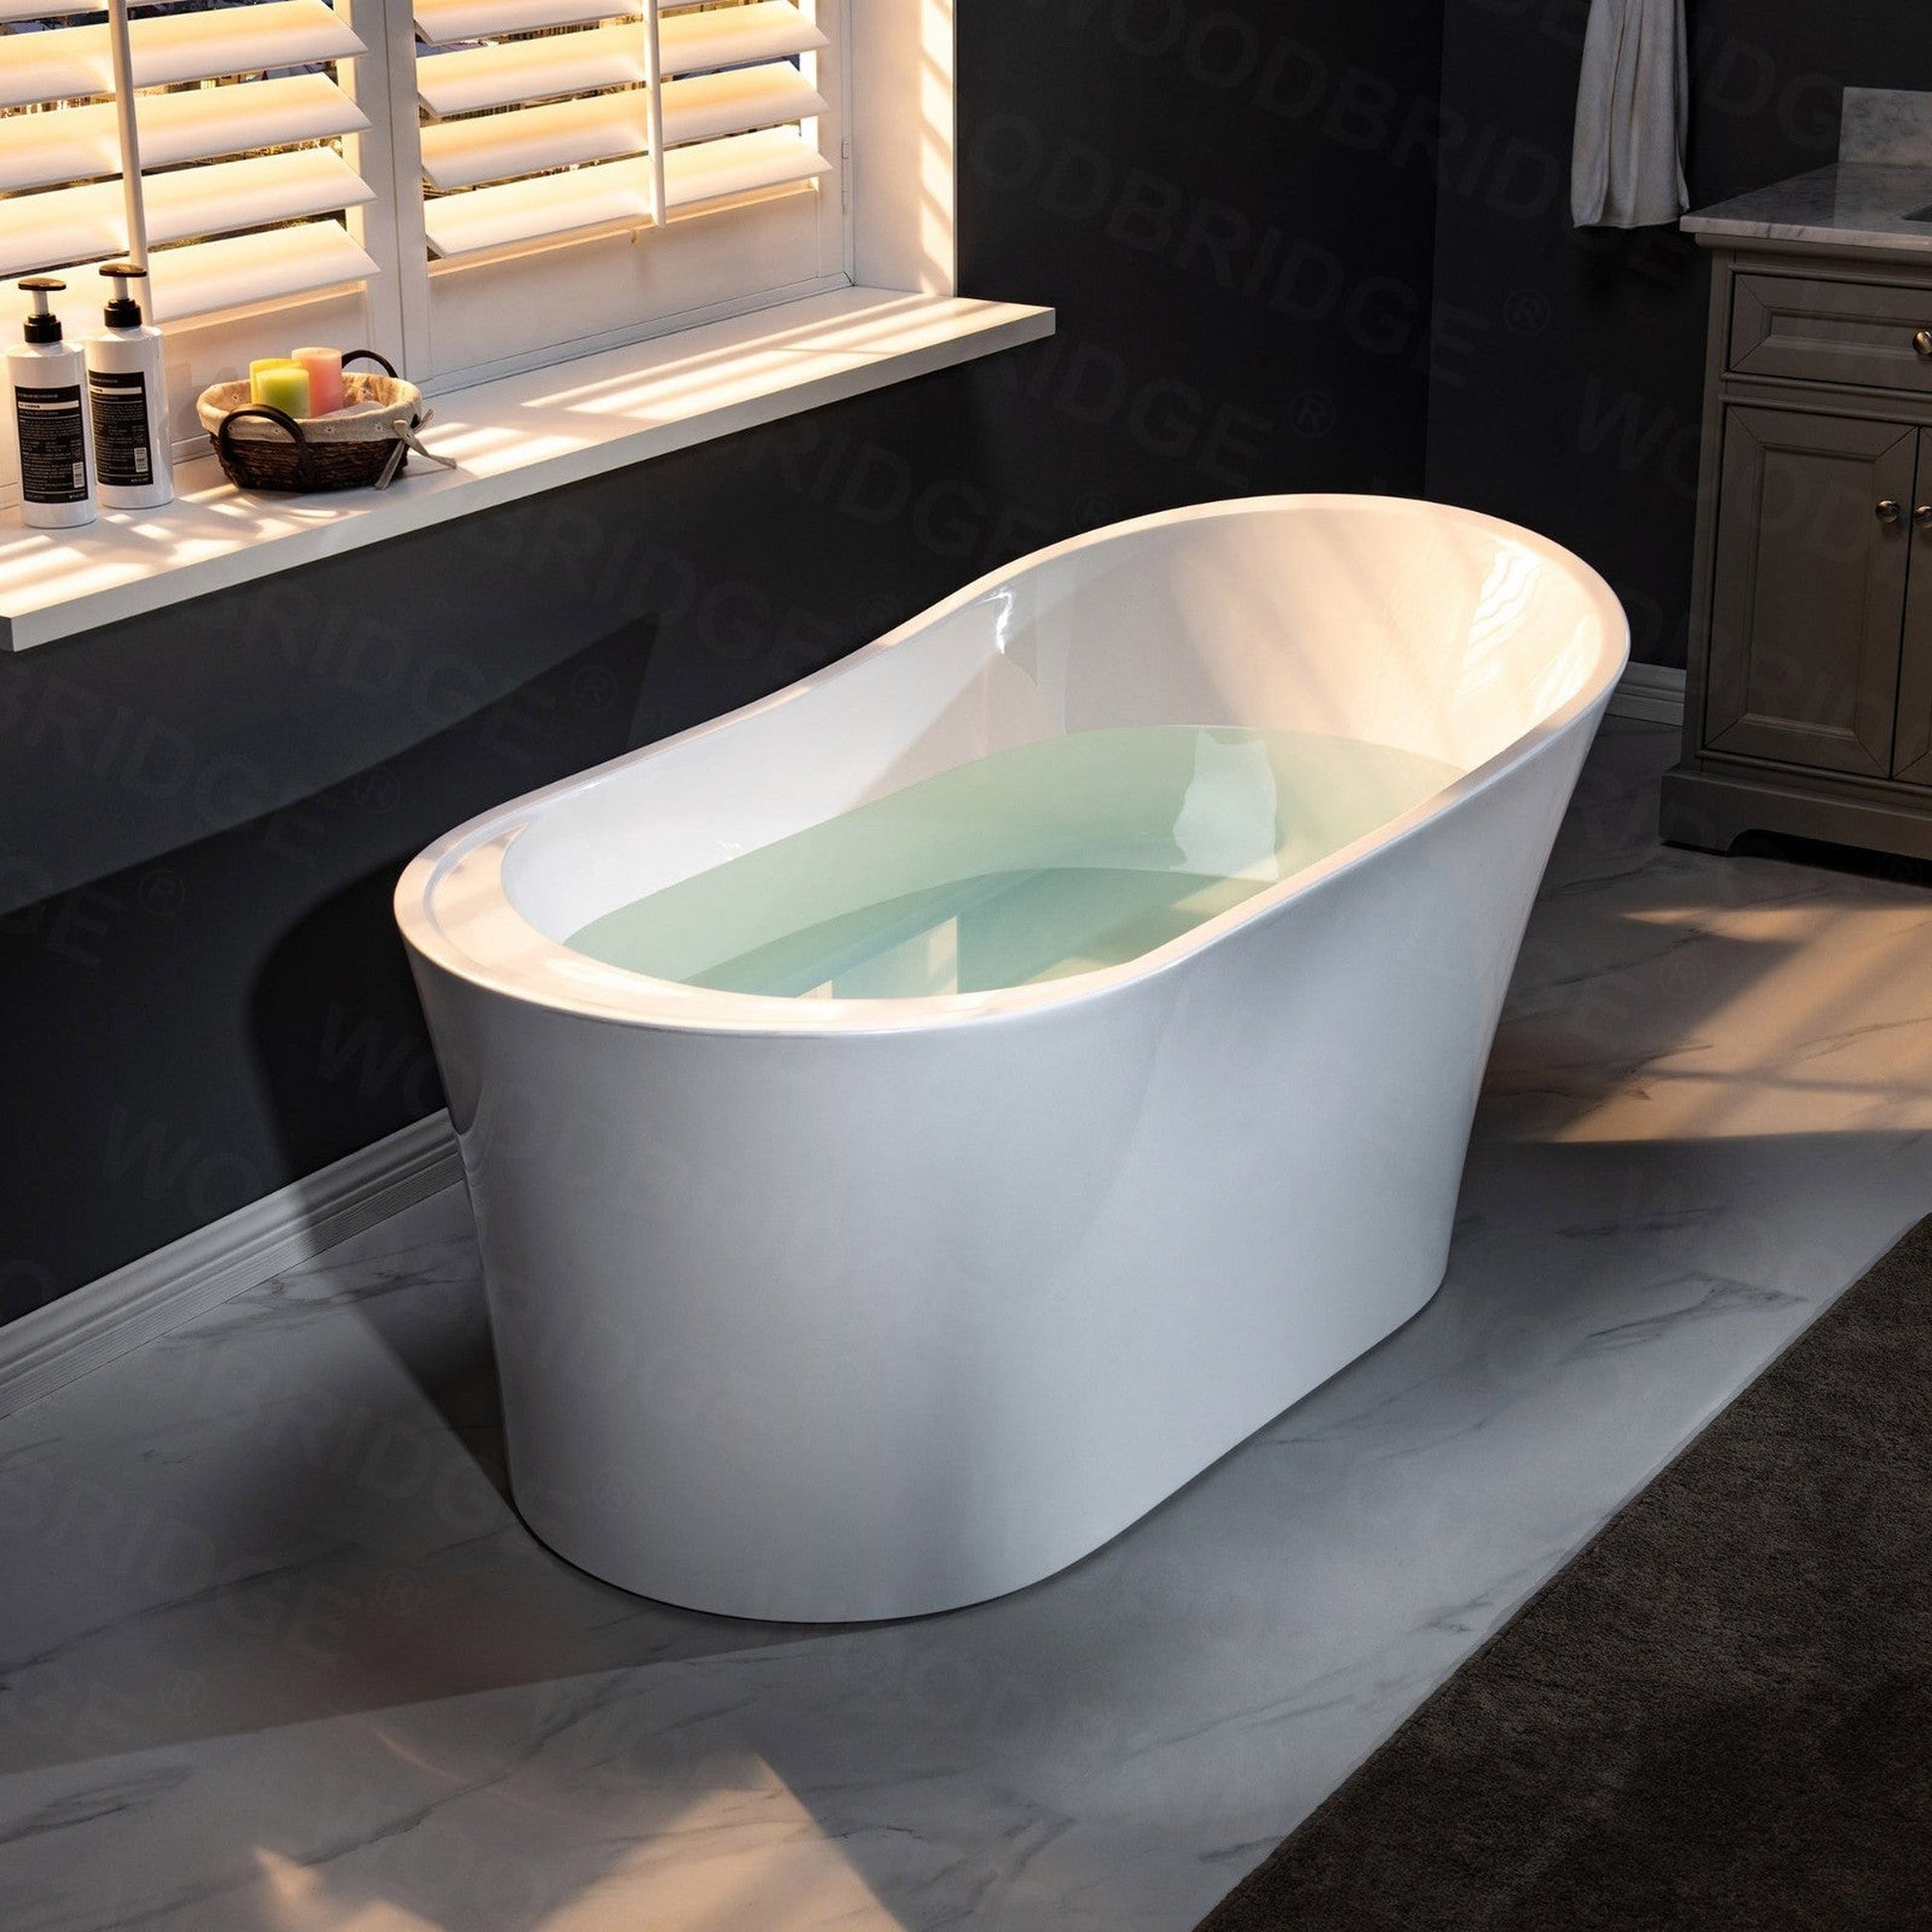 WoodBridge B0084 67" White Acrylic Freestanding Soaking Bathtub With Chrome Drain, Overflow, F0071CHVT Tub Filler and Caddy Tray